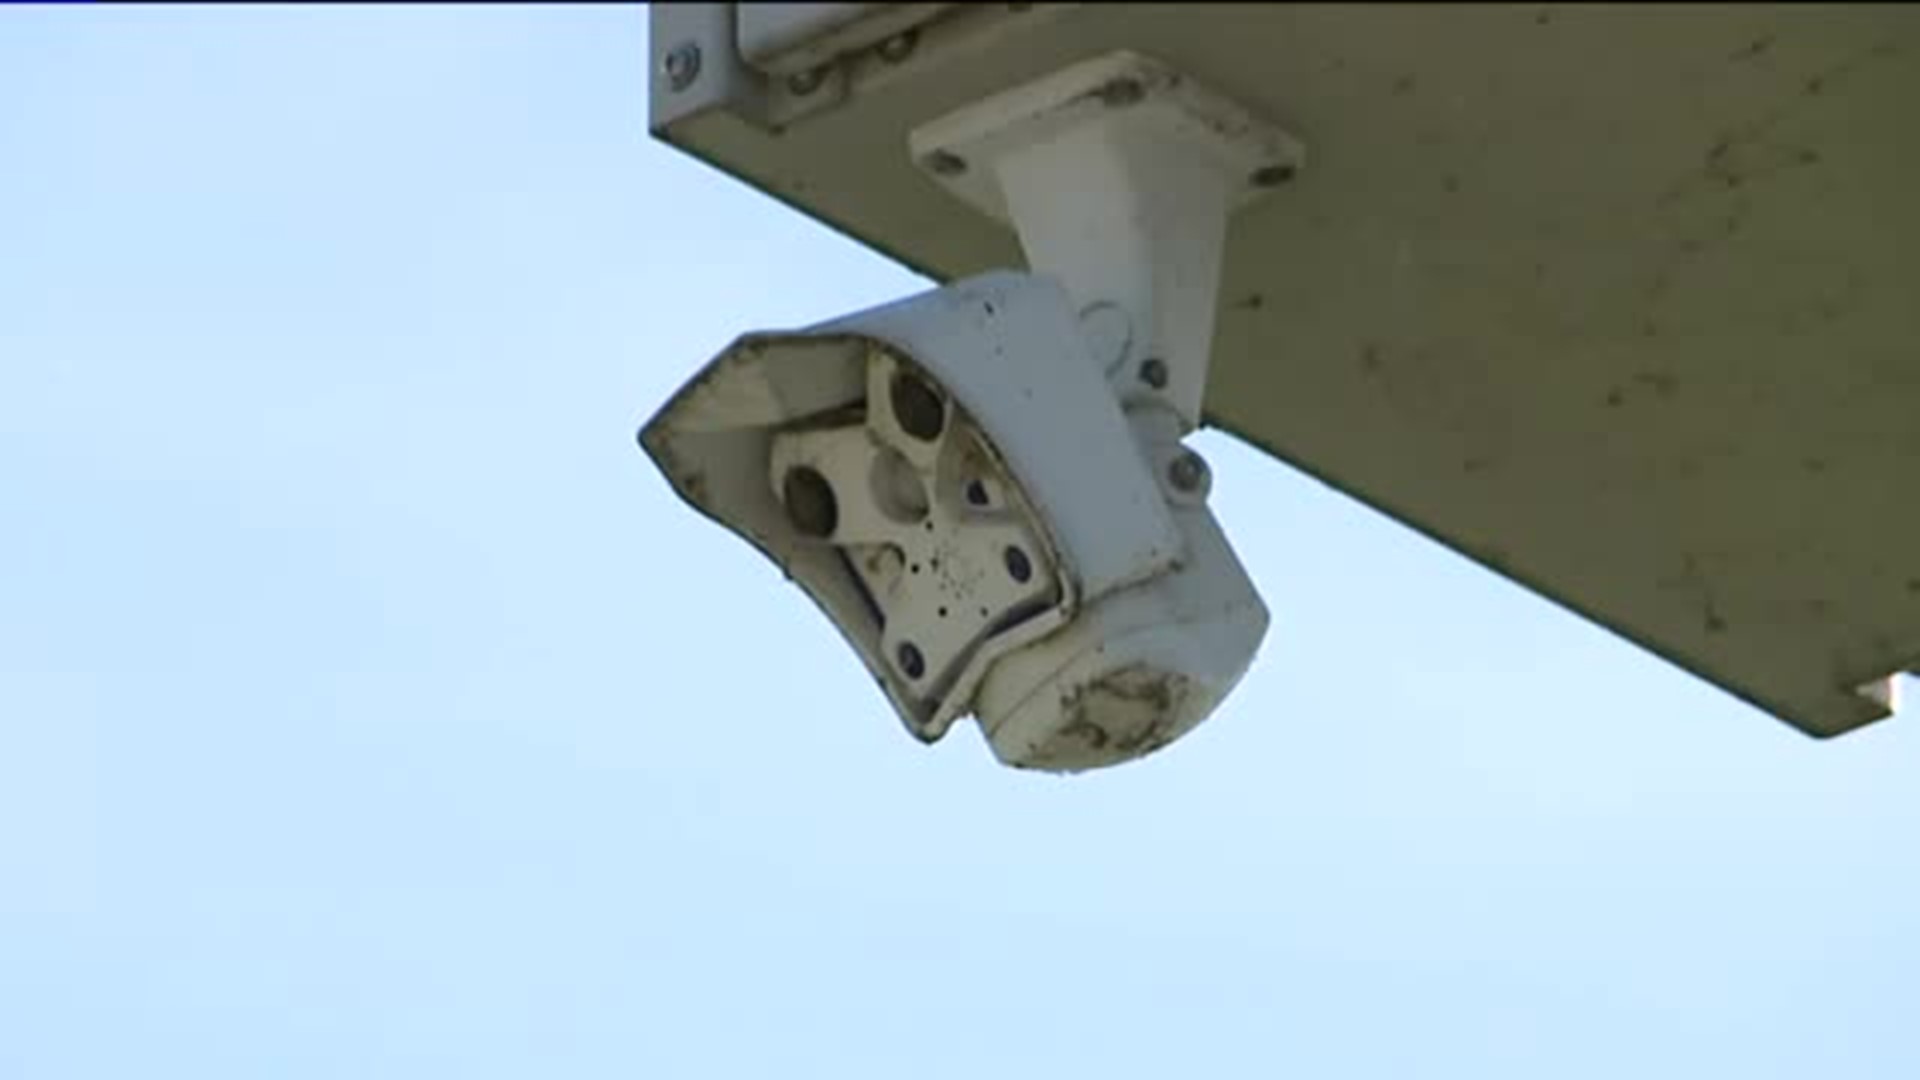 Sunbury Surveillance Cameras: A Waste of Money?